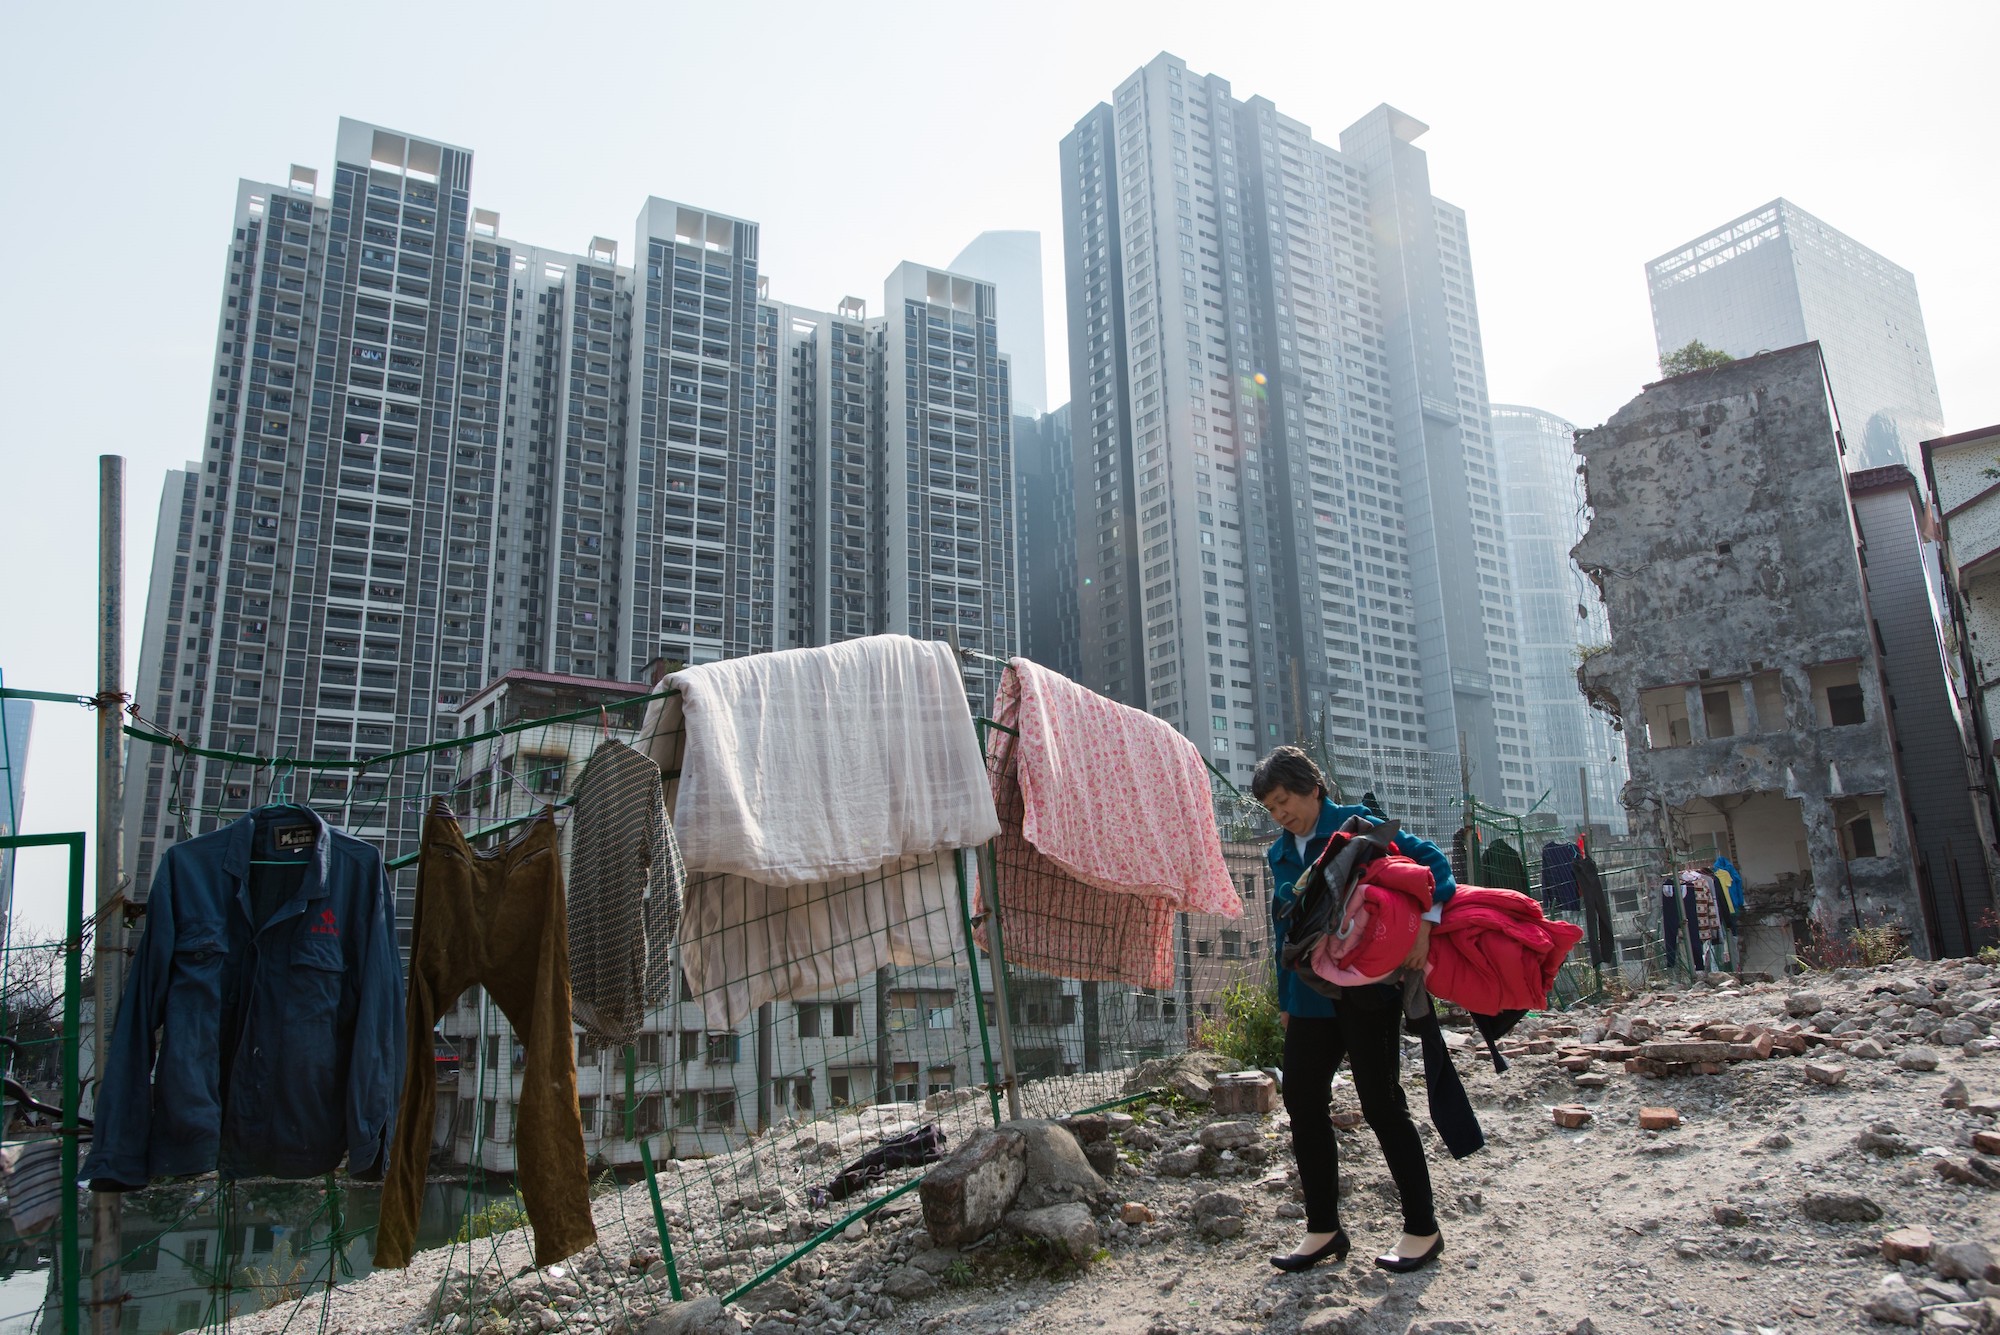 A woman does laundry near demolished residential buildings in Xiancun, a urban village in the Zhujiang New Town district of Guangzhou as high commercial and residential buildings rise in the distance.